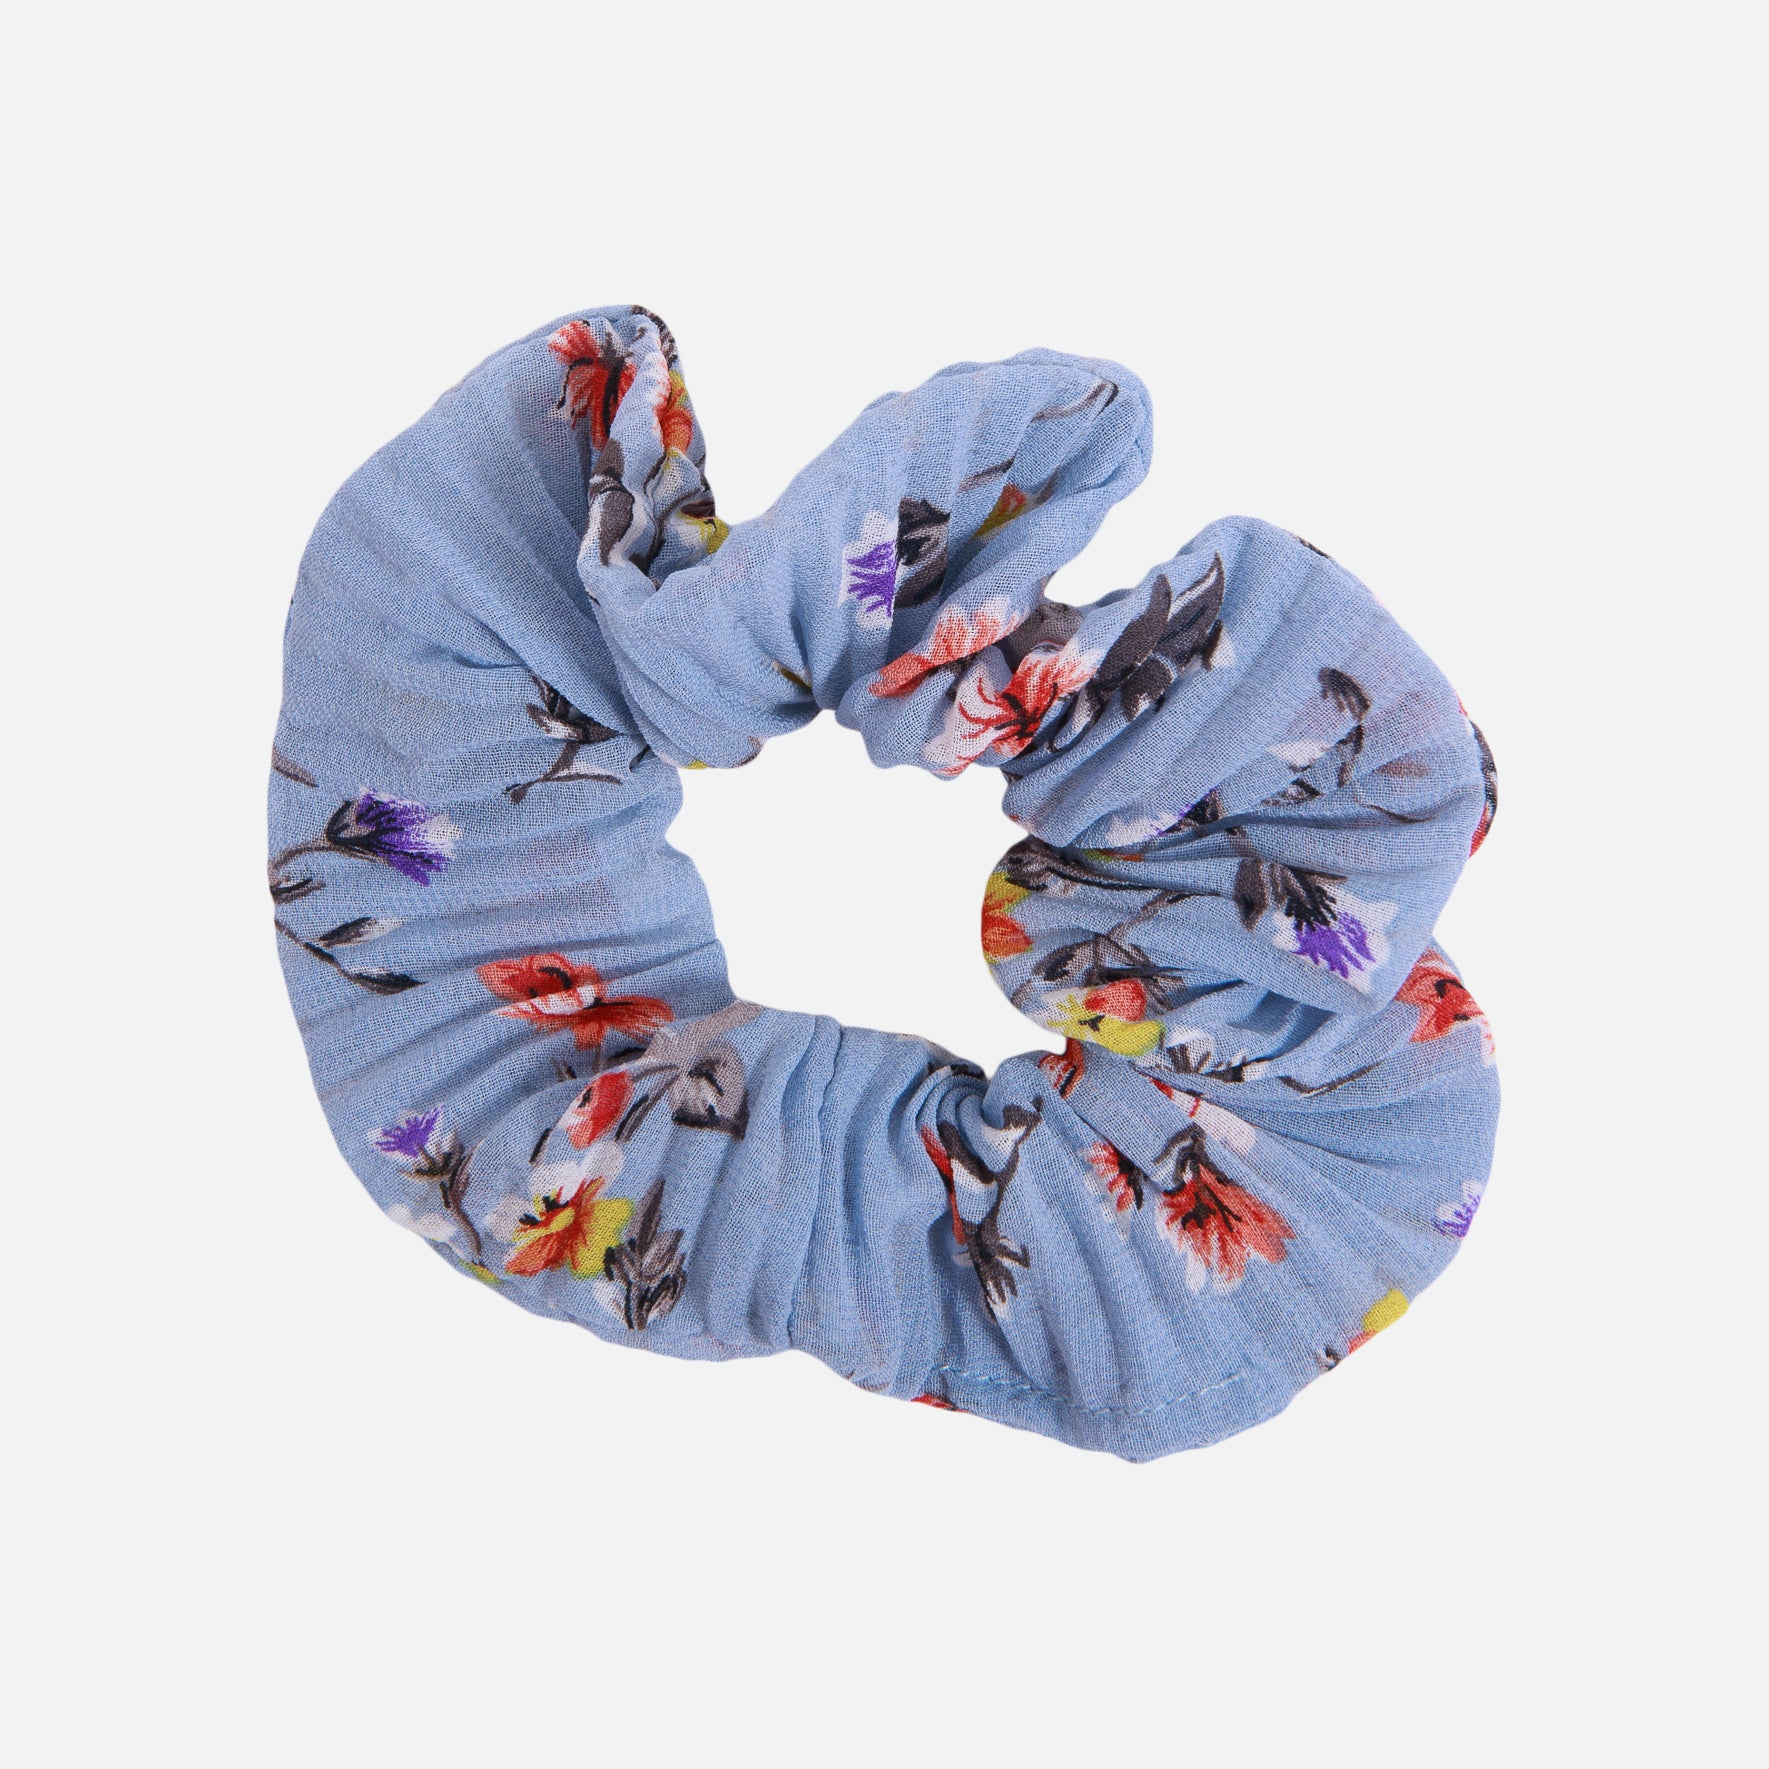 Set of 3 scrunchies, blue, floral print and polka dot print